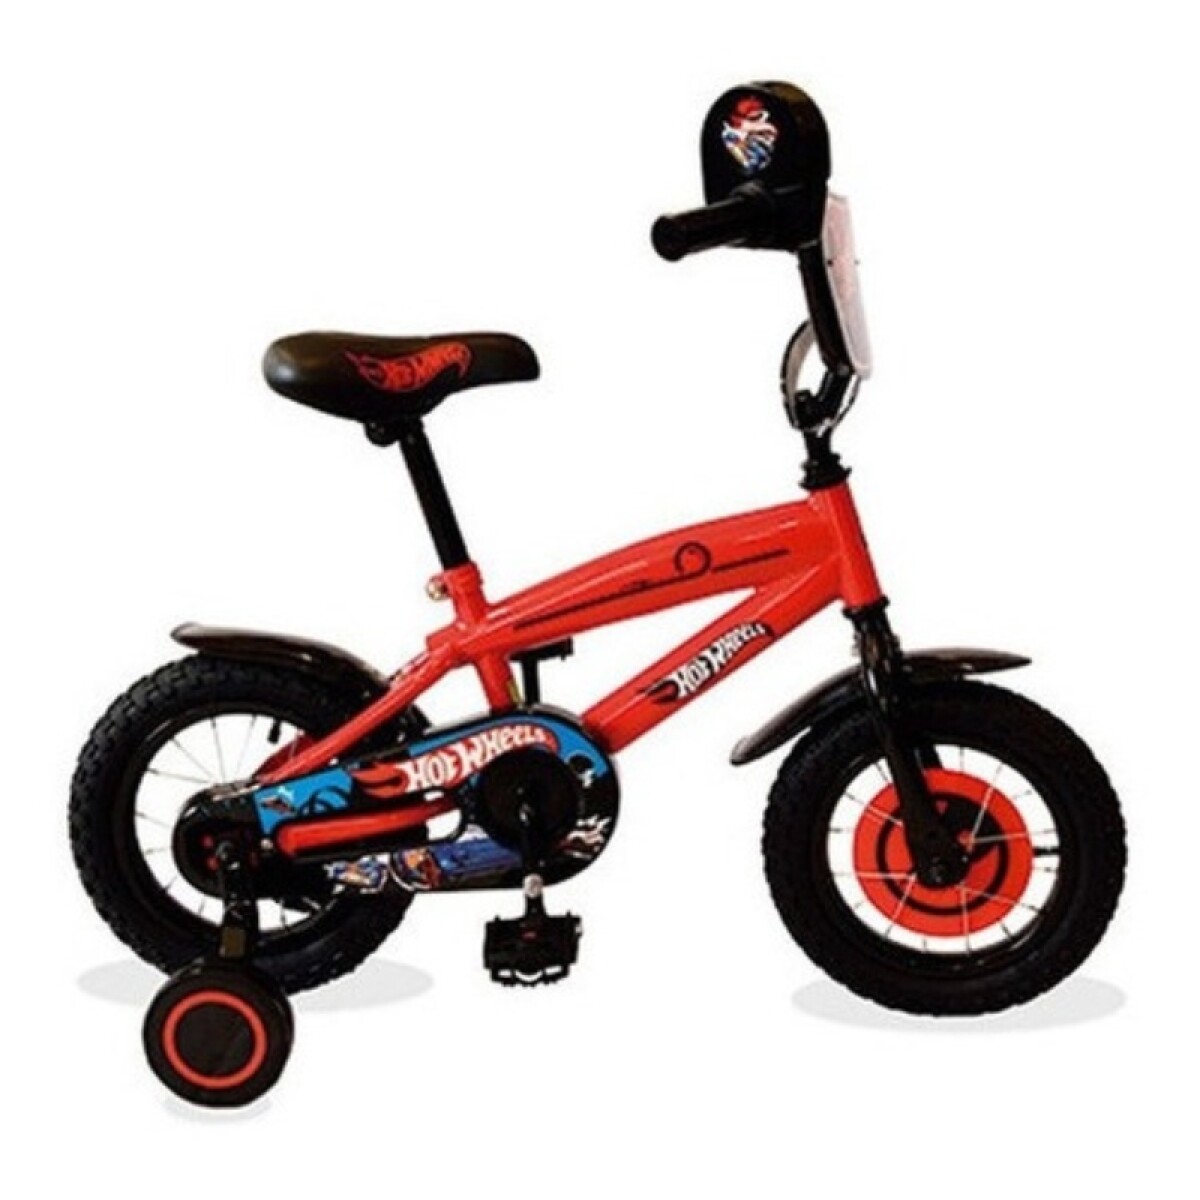 Bicicleta Hotwheels R.12 Niño - Rojo 